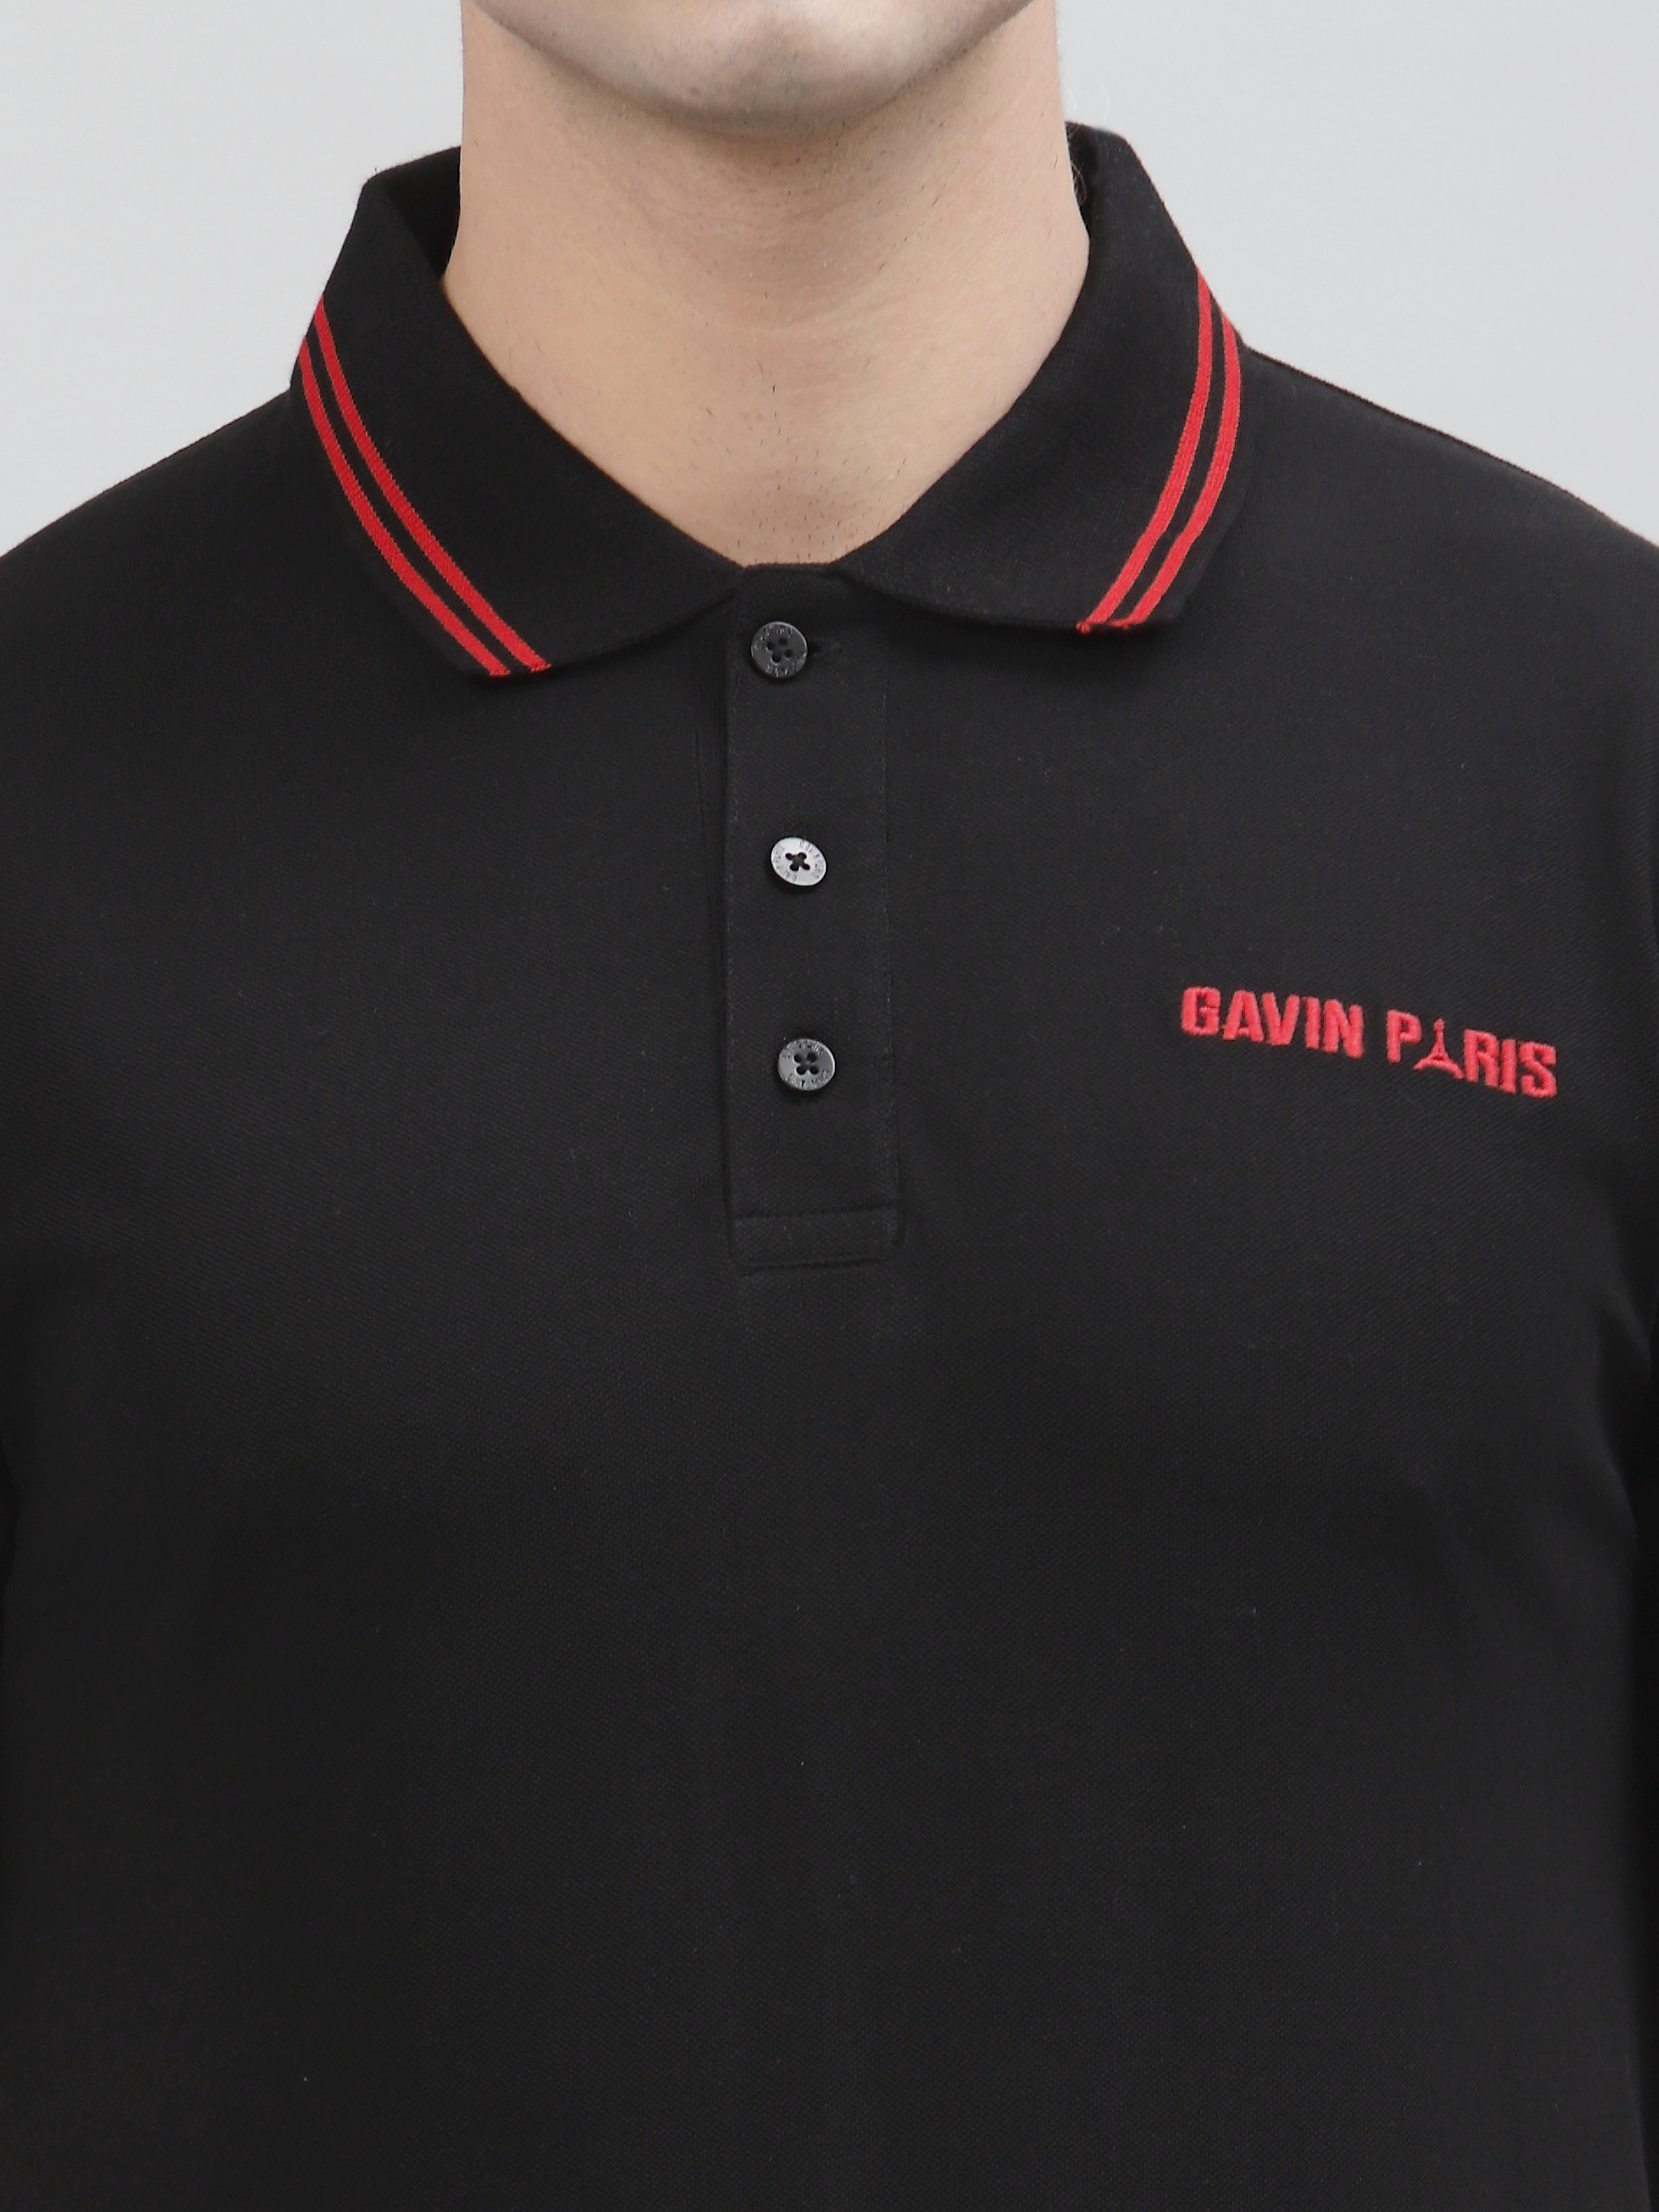 Black Embroidered Pique Polo Shirt by Gavin Paris